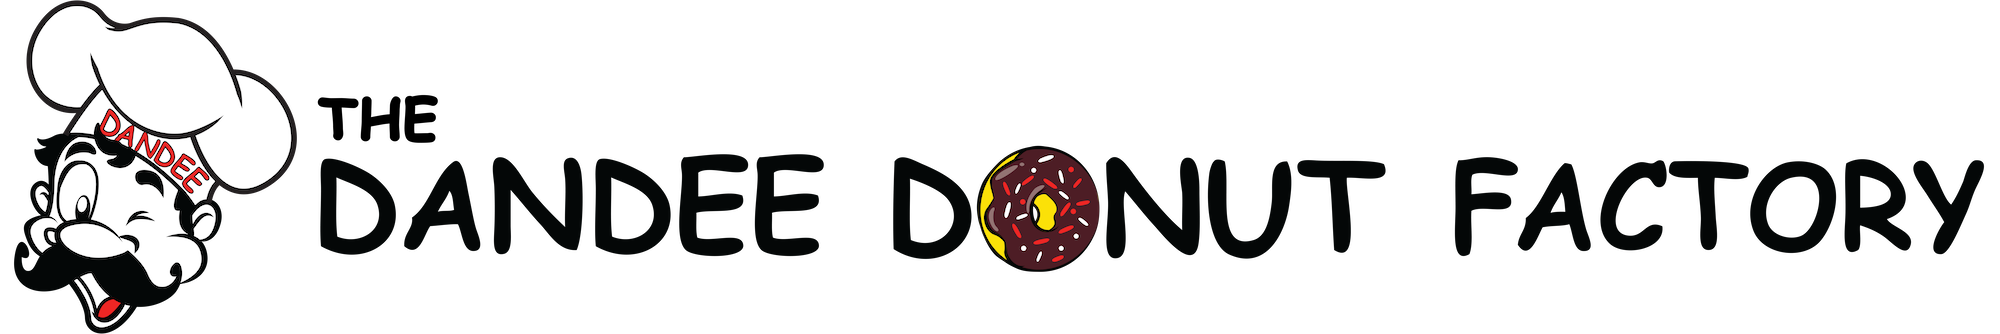 Dandee Donuts logo